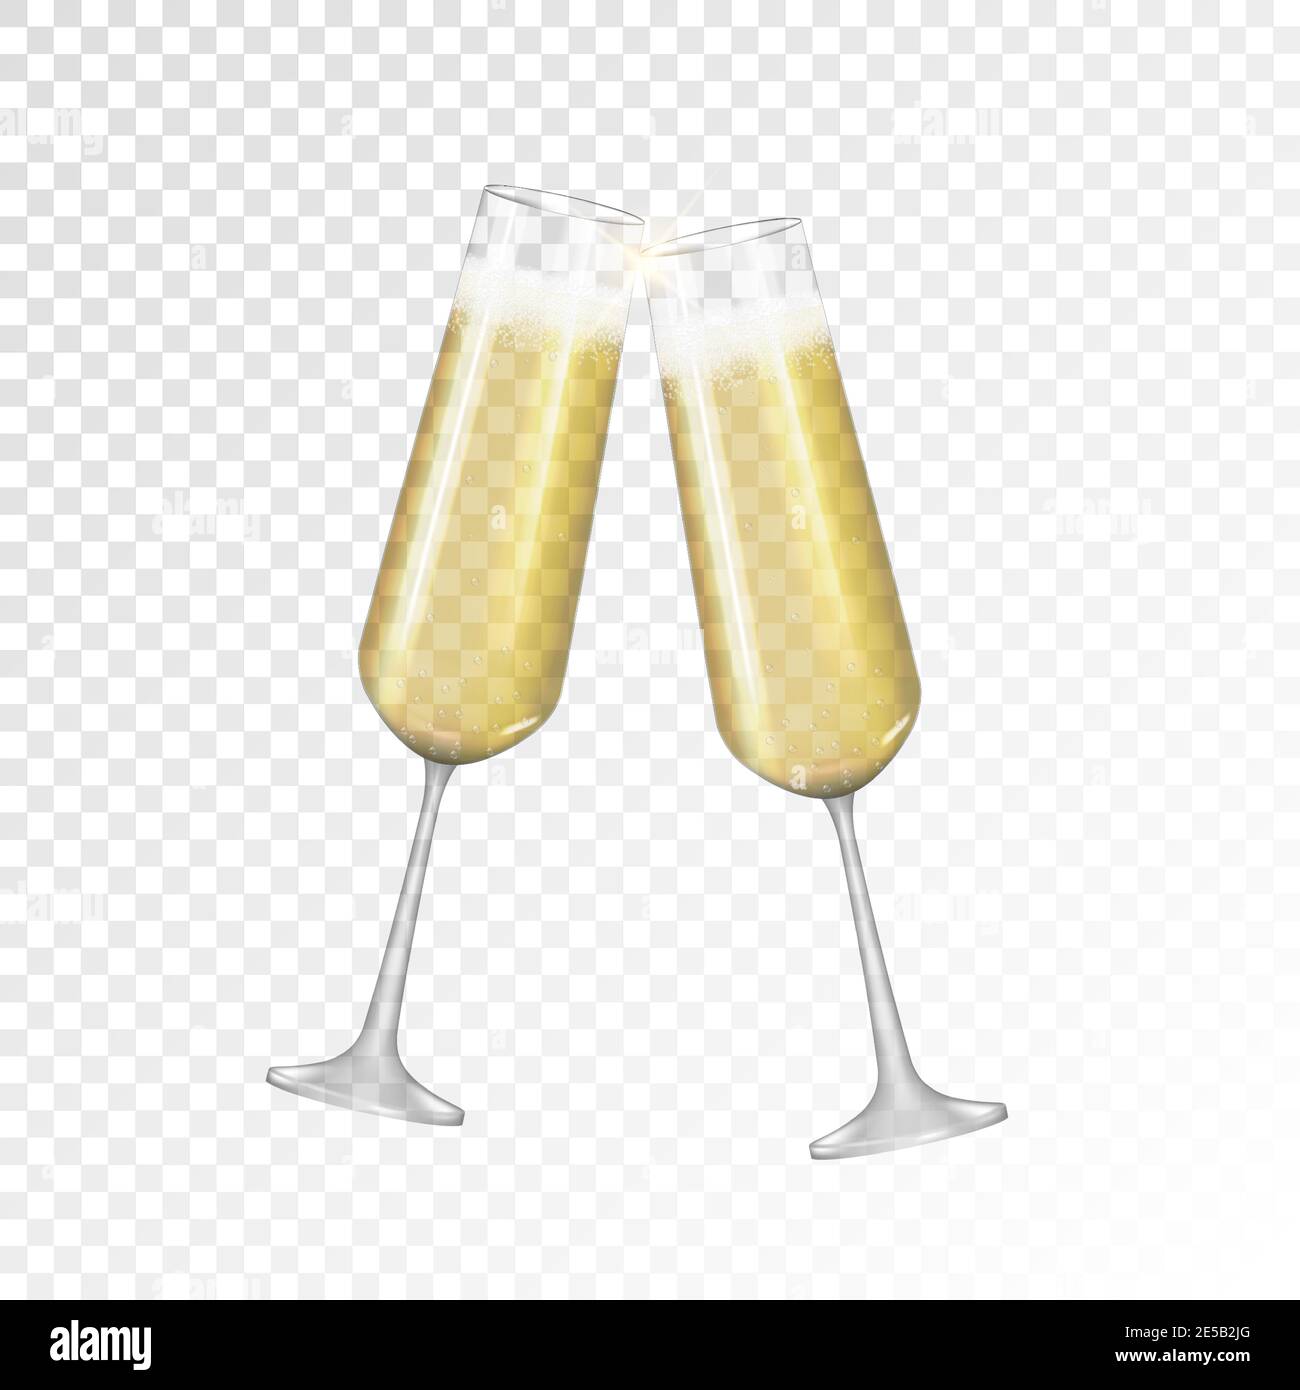 https://c8.alamy.com/comp/2E5B2JG/realistic-3d-champagne-golden-glass-icon-isolated-on-transparent-background-vector-illustration-2E5B2JG.jpg